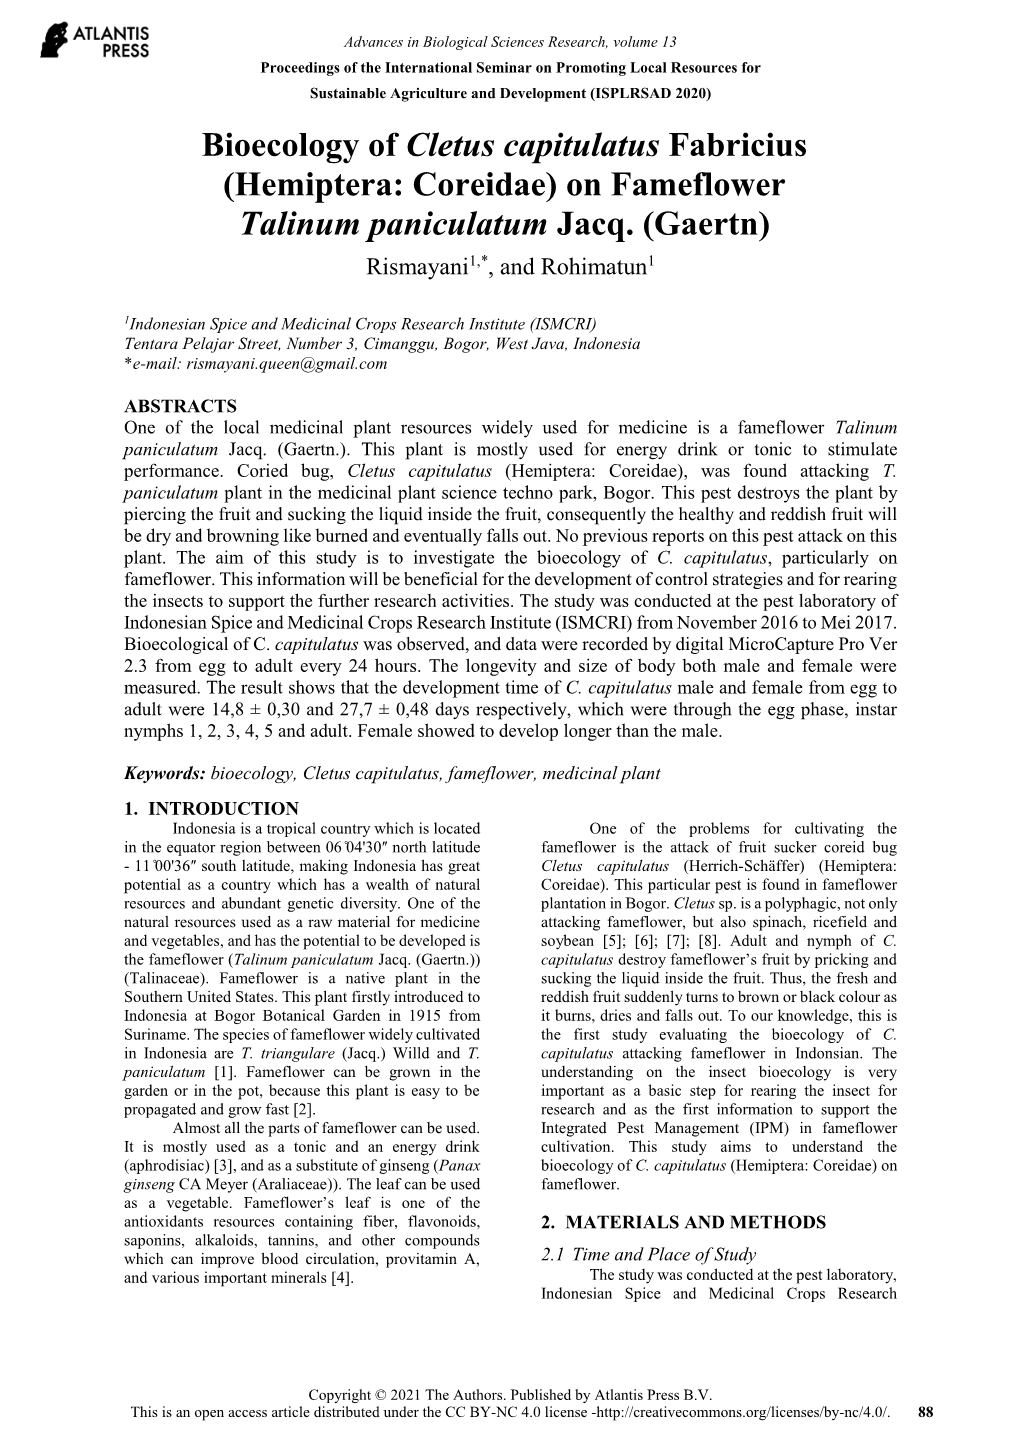 On Fameflower Talinum Paniculatum Jacq. (Gaertn) Rismayani1,*, and Rohimatun1